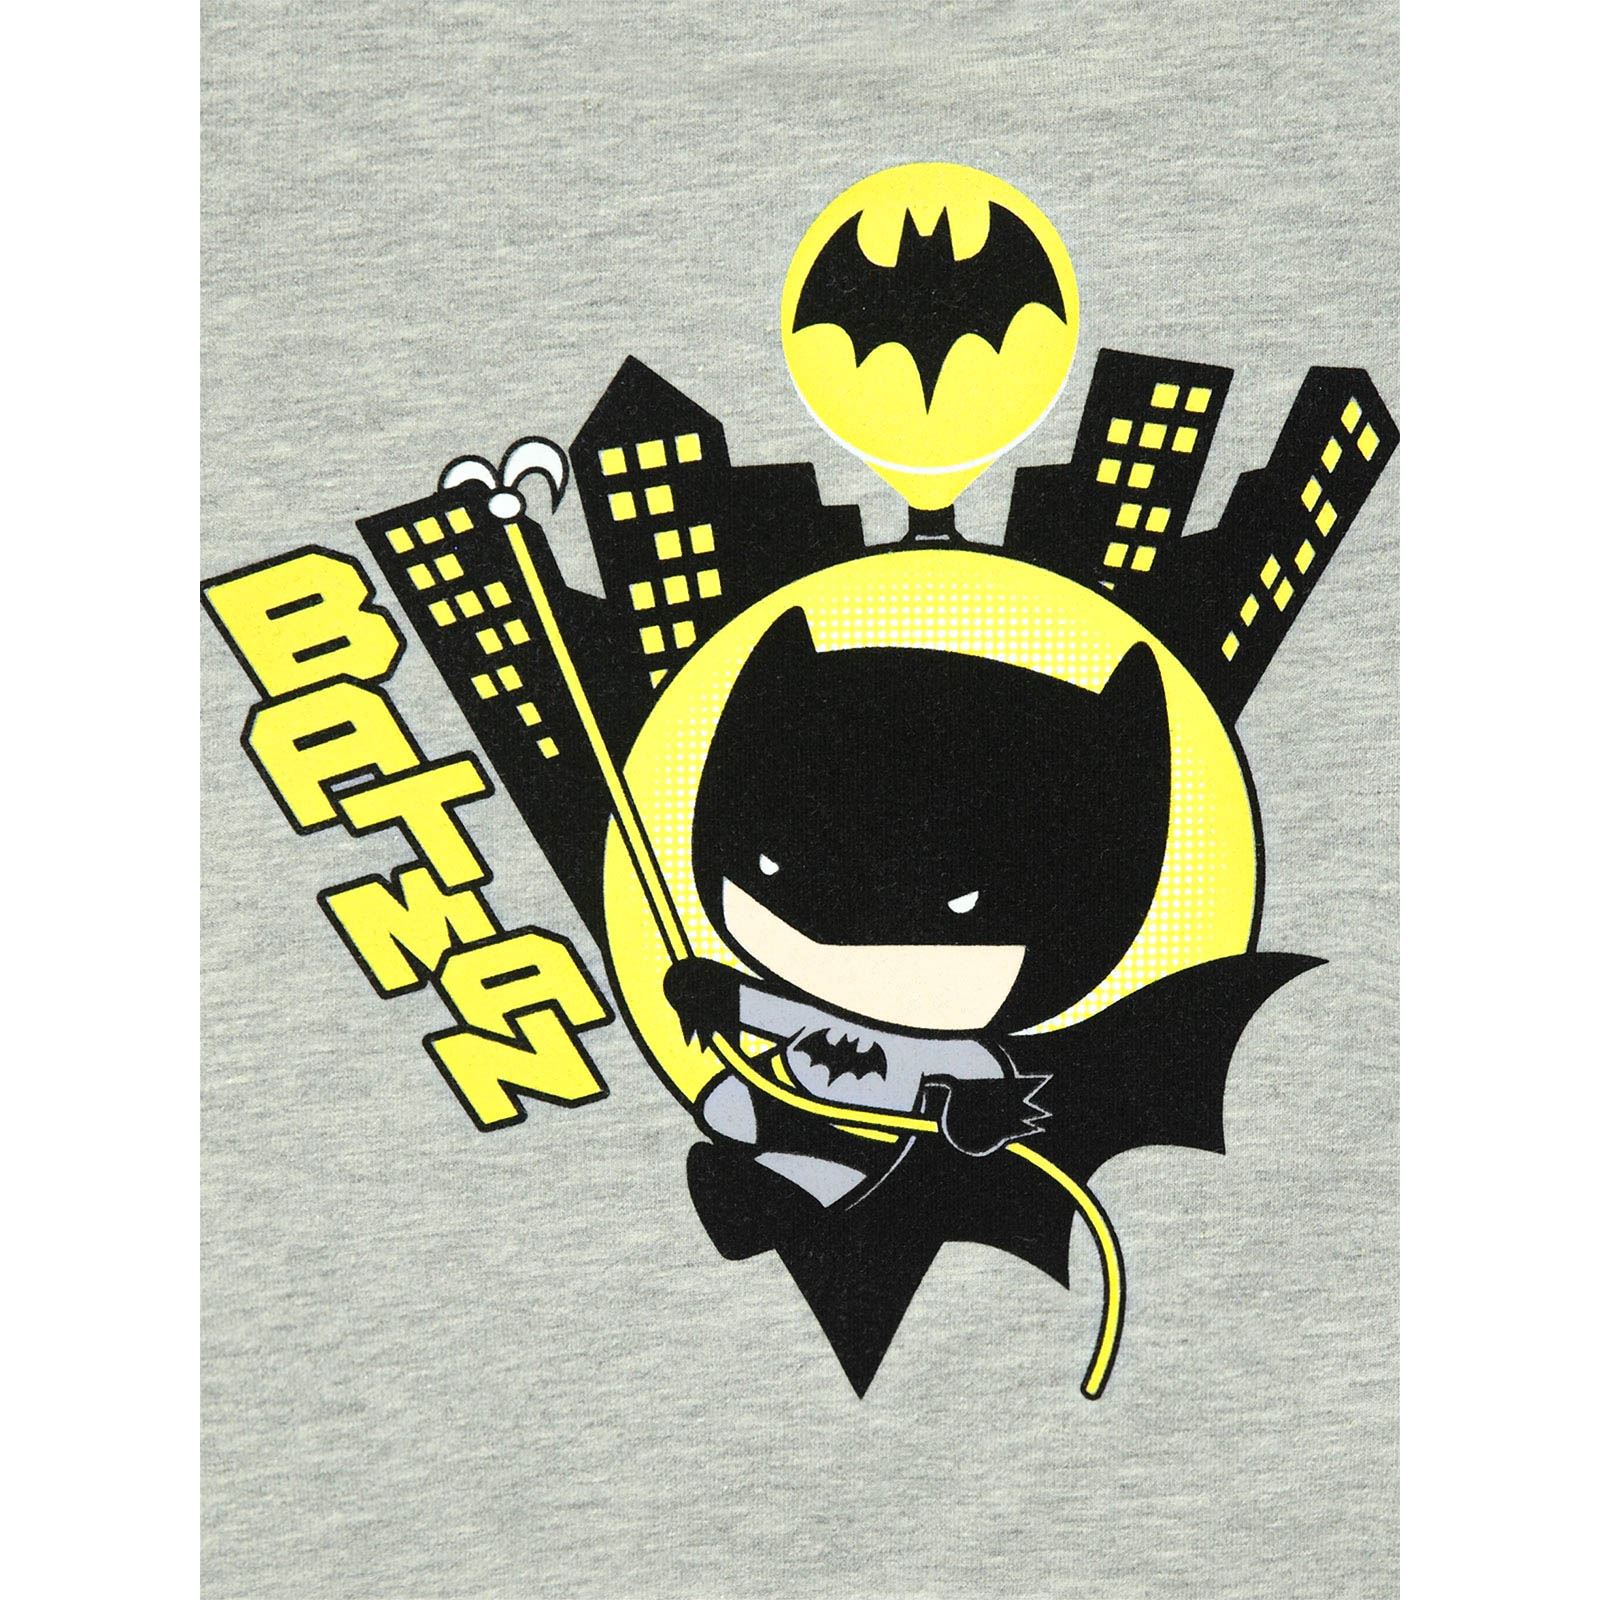 Batman Erkek Bebek Sweatshirt 6-18 Ay Gri